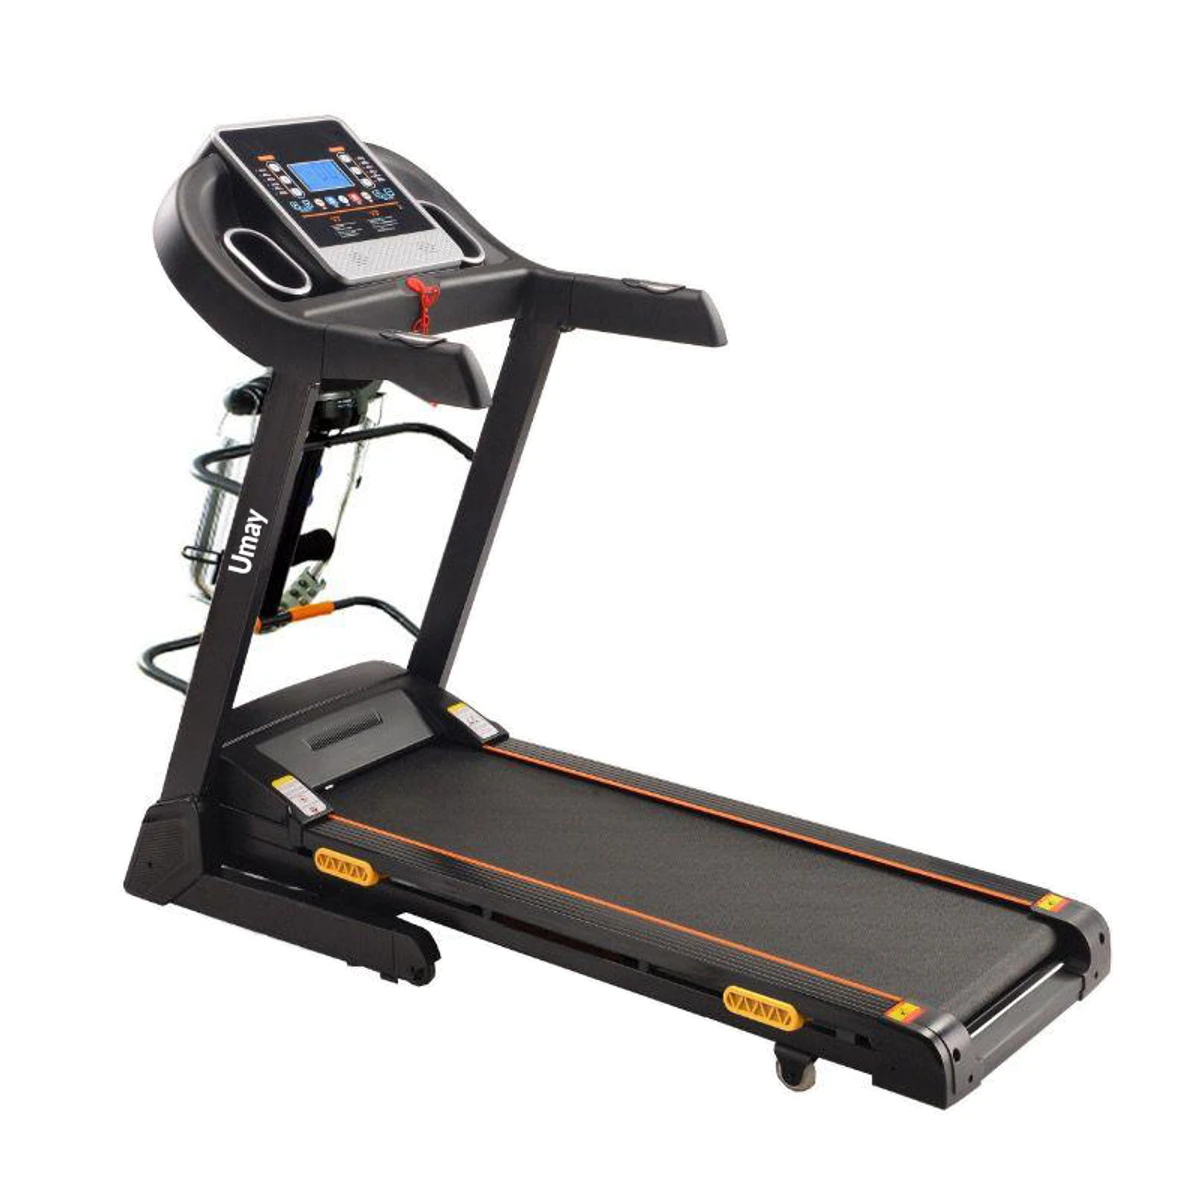 Umay T600AM Multifunction foldable motorized treadmill